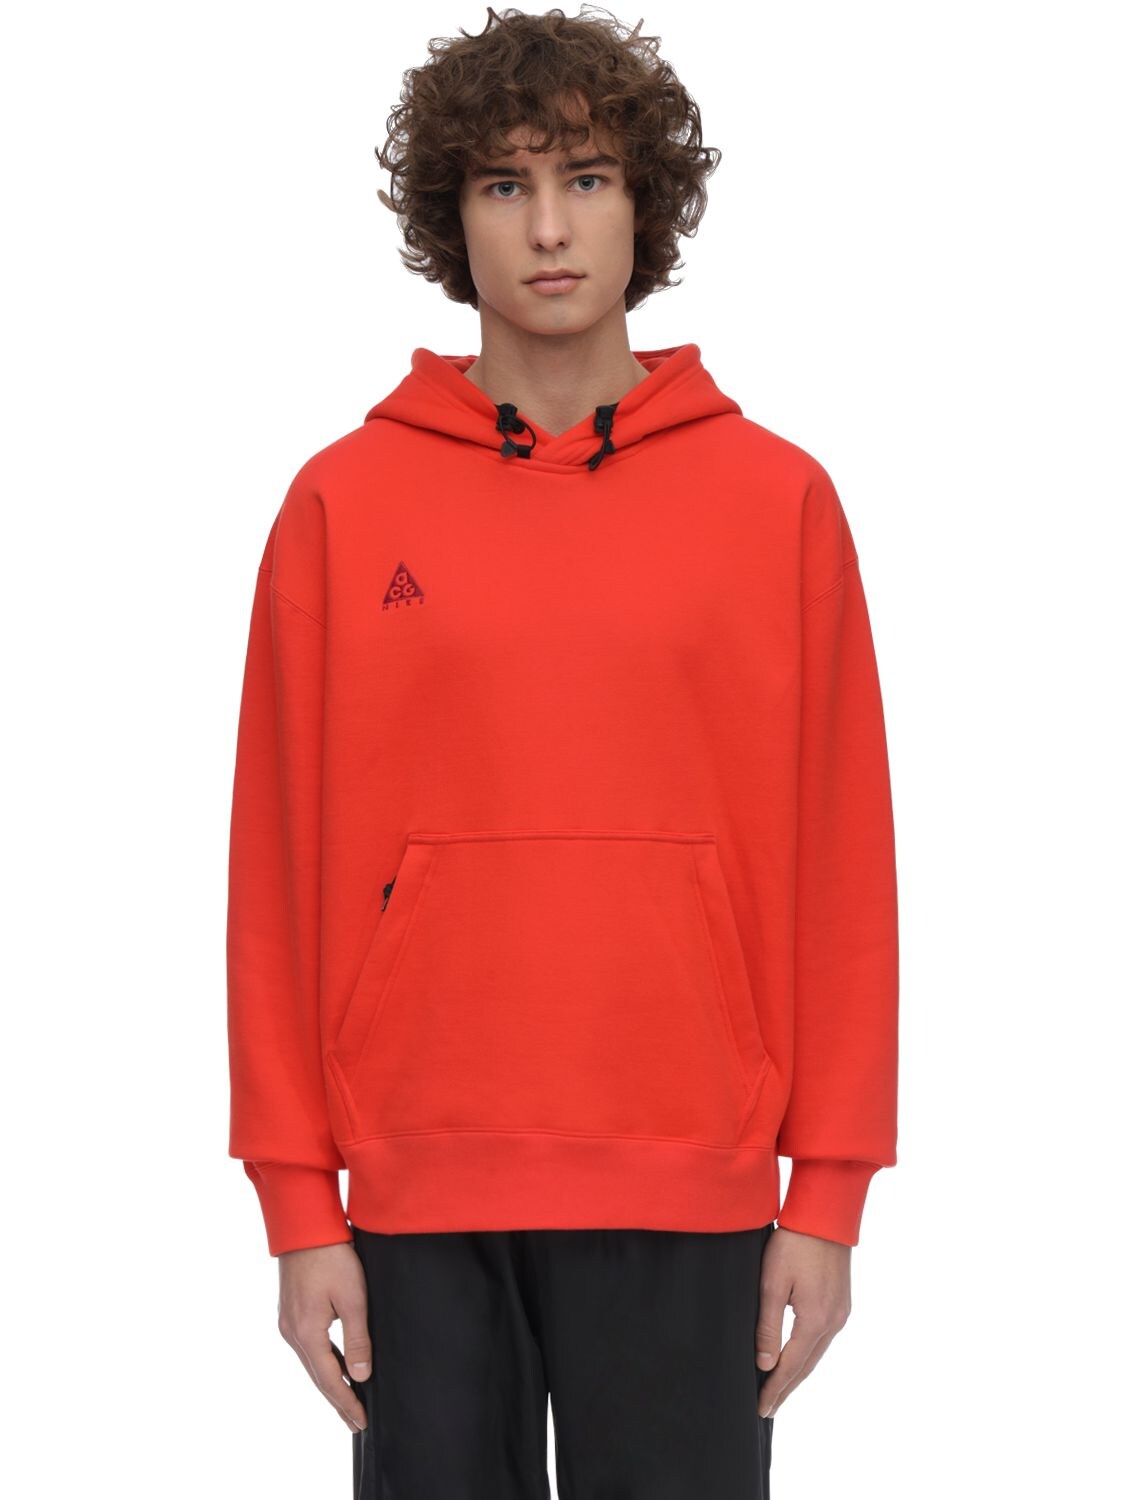 Nike Acg Nrg Sweatshirt Hoodie In Habanero Red